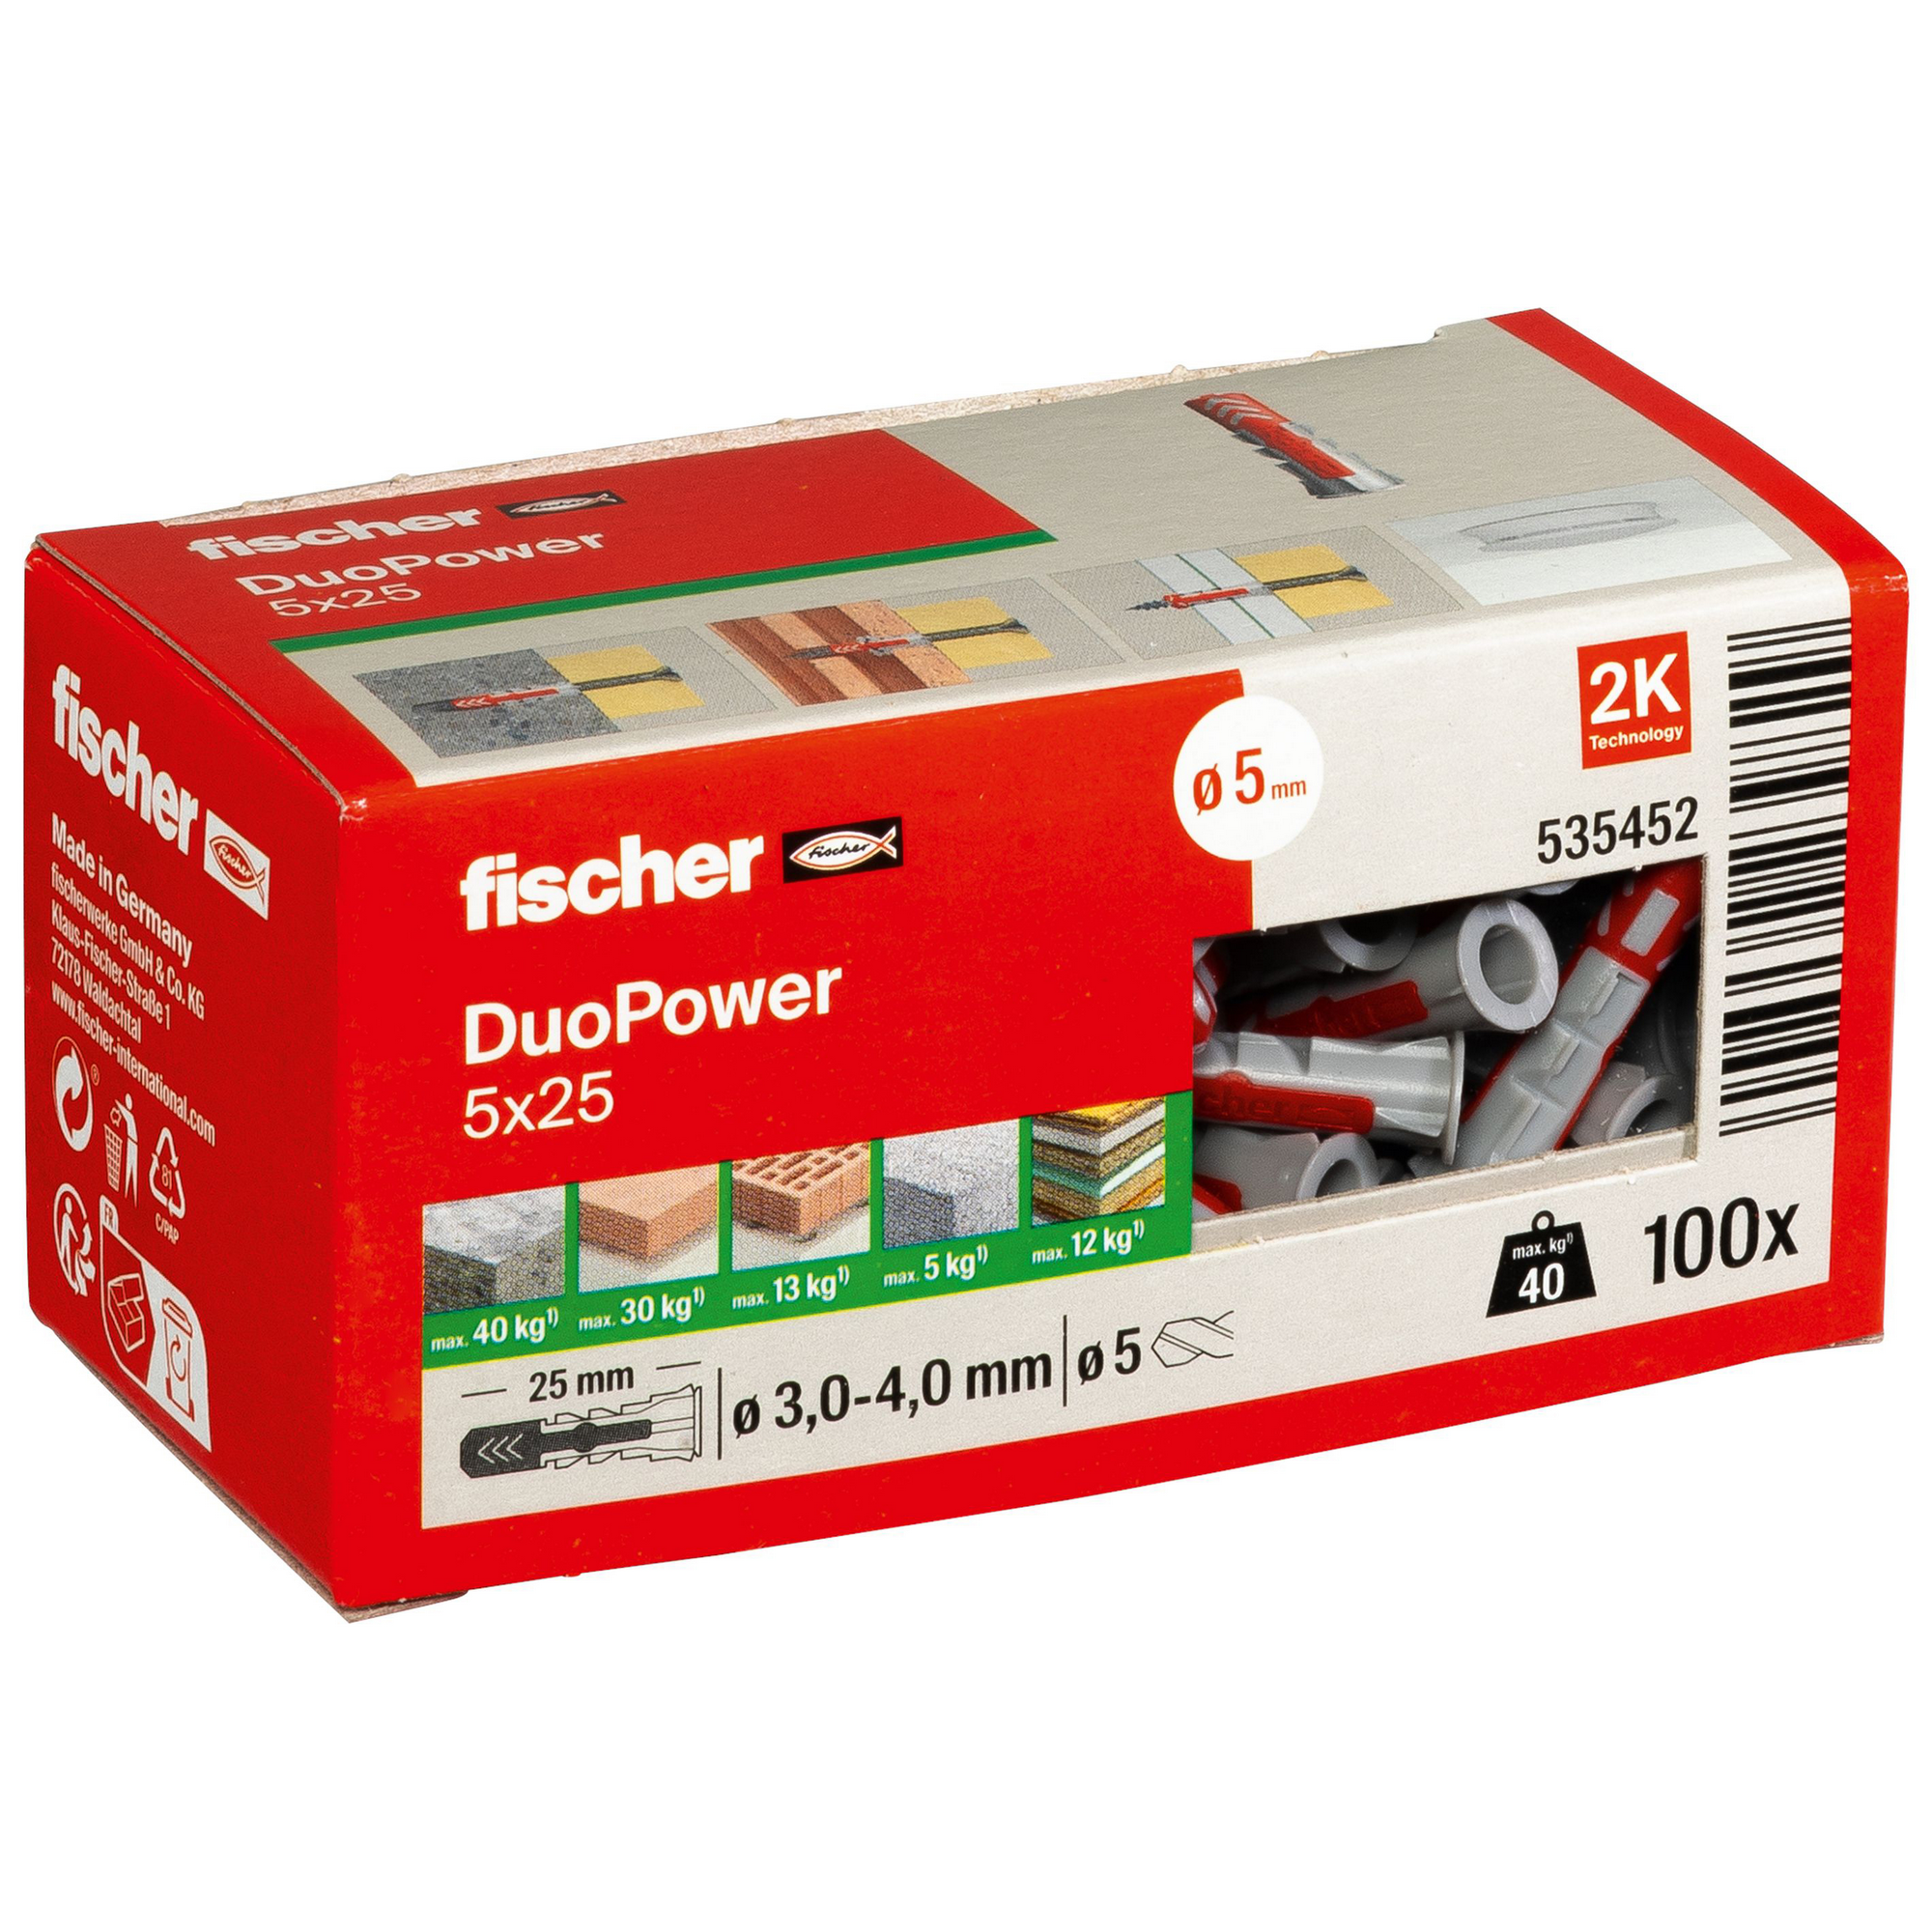 fischer DUOPOWER 5 x 25 LD 100 Stück + product picture